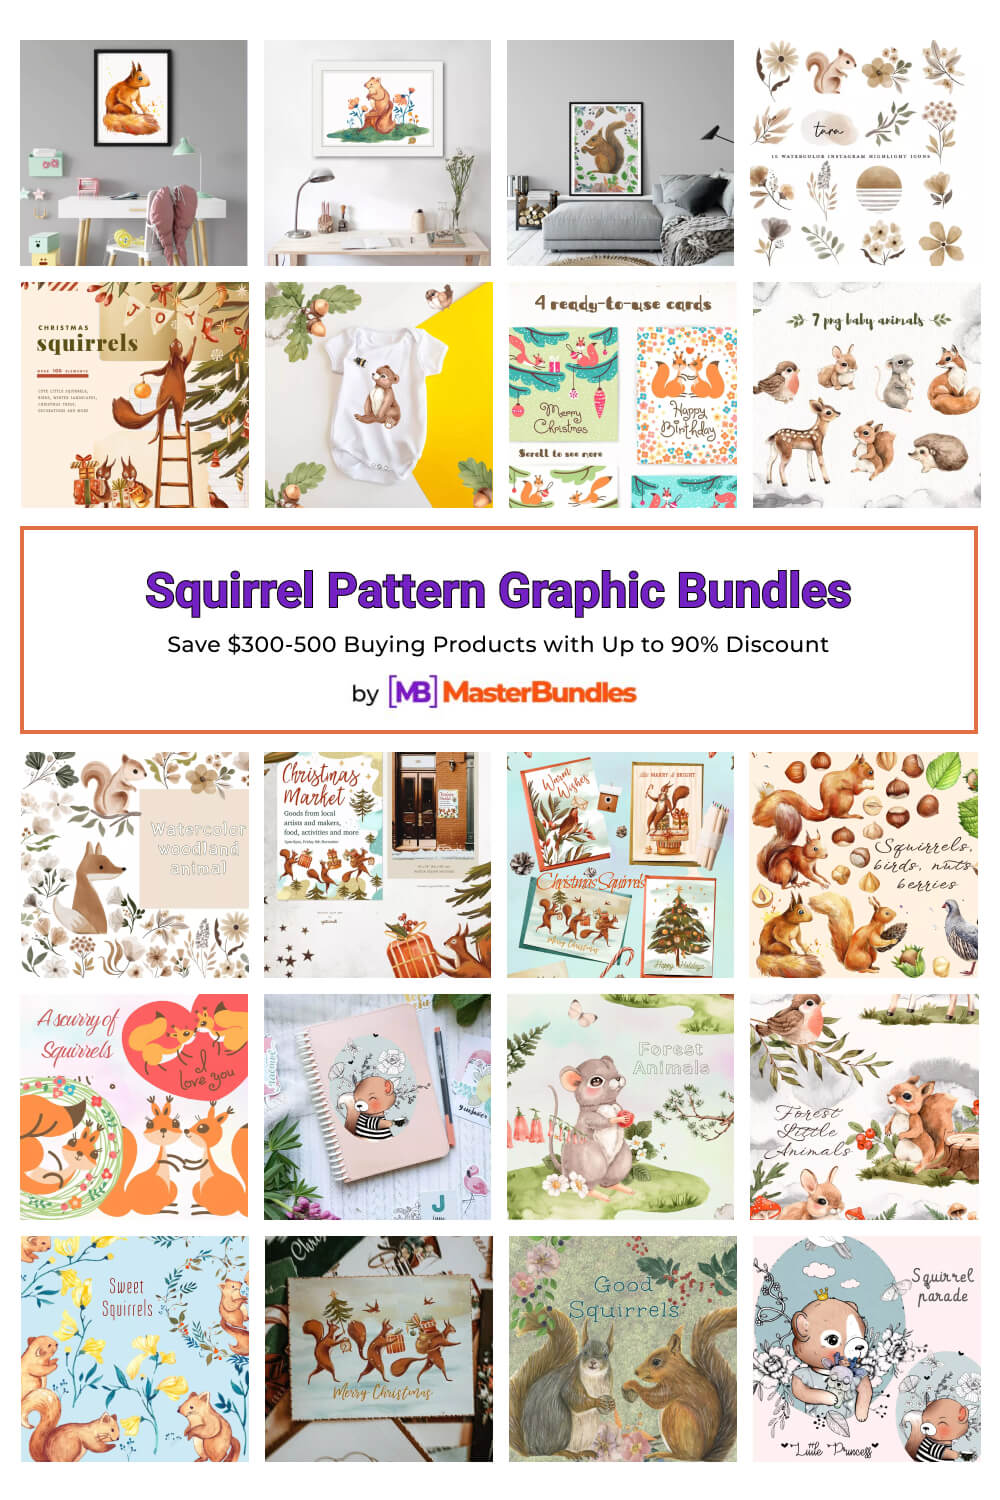 squirrel pattern graphic bundles pinterest image.